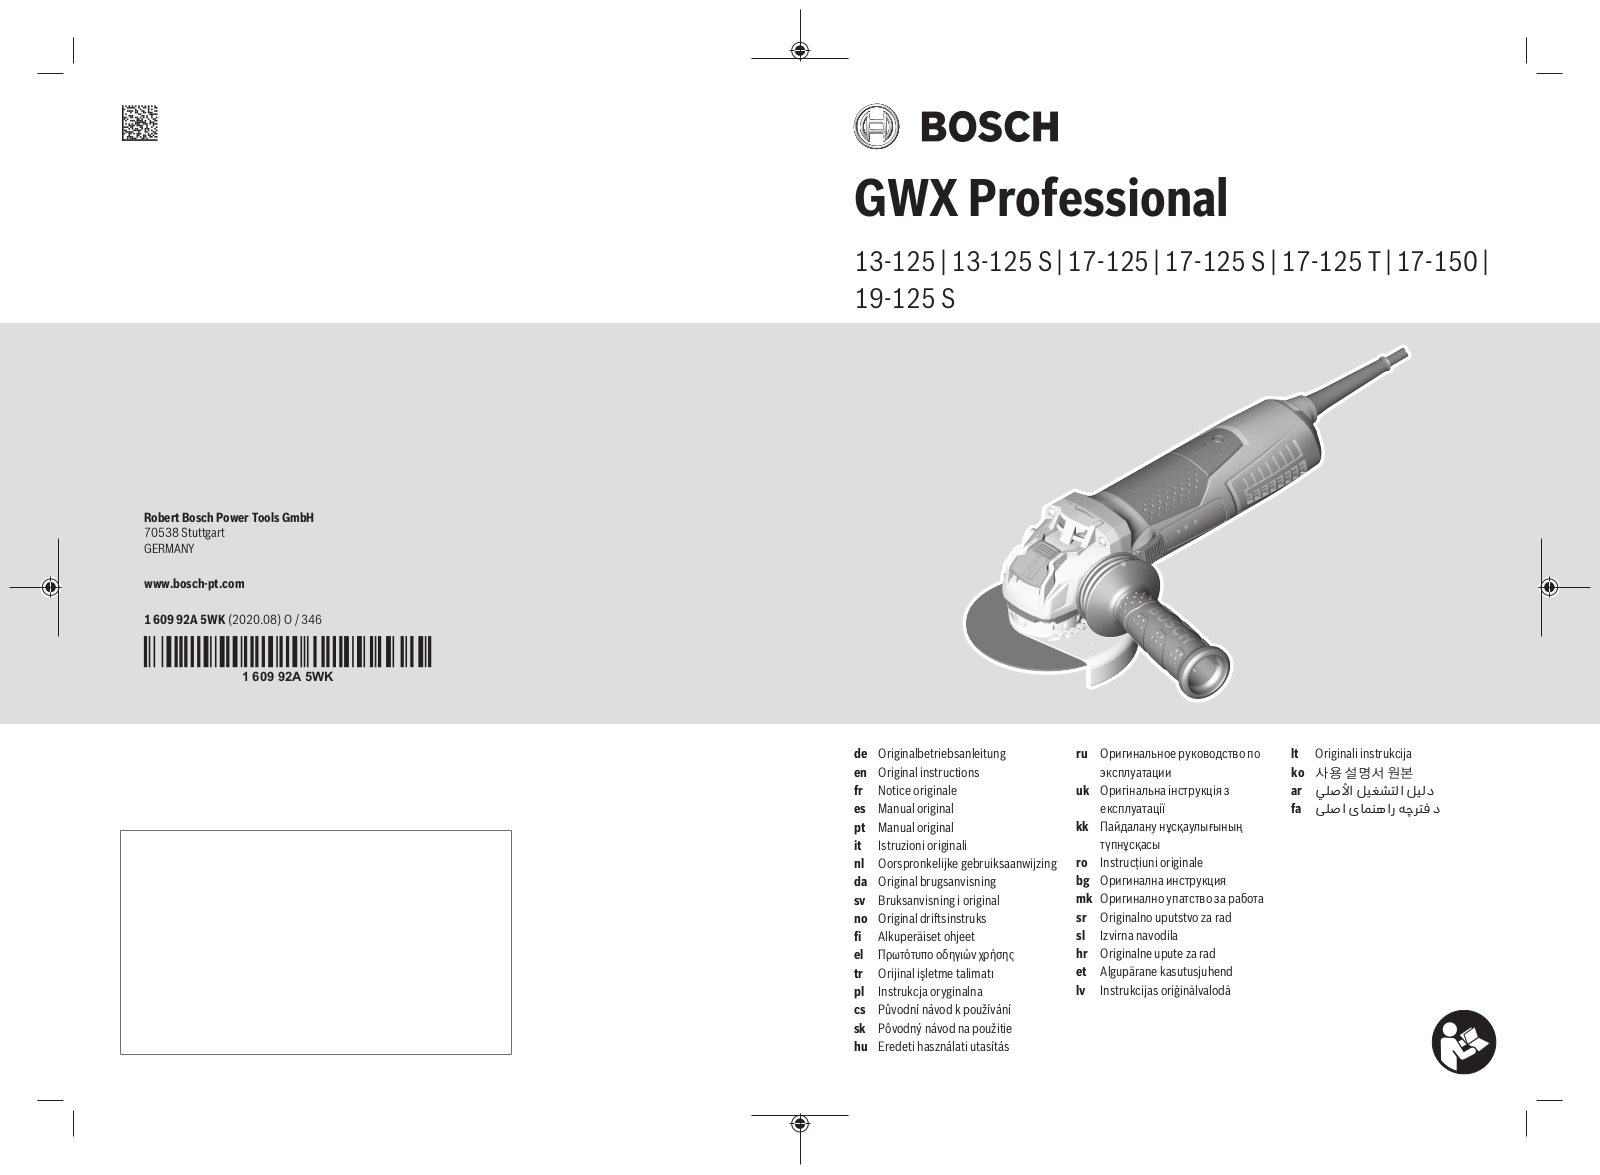 Bosch GWX 17-125, GWX 17-125 T, GWX 17-150, GWX 19-125 S, GWX 13-125 User Manual